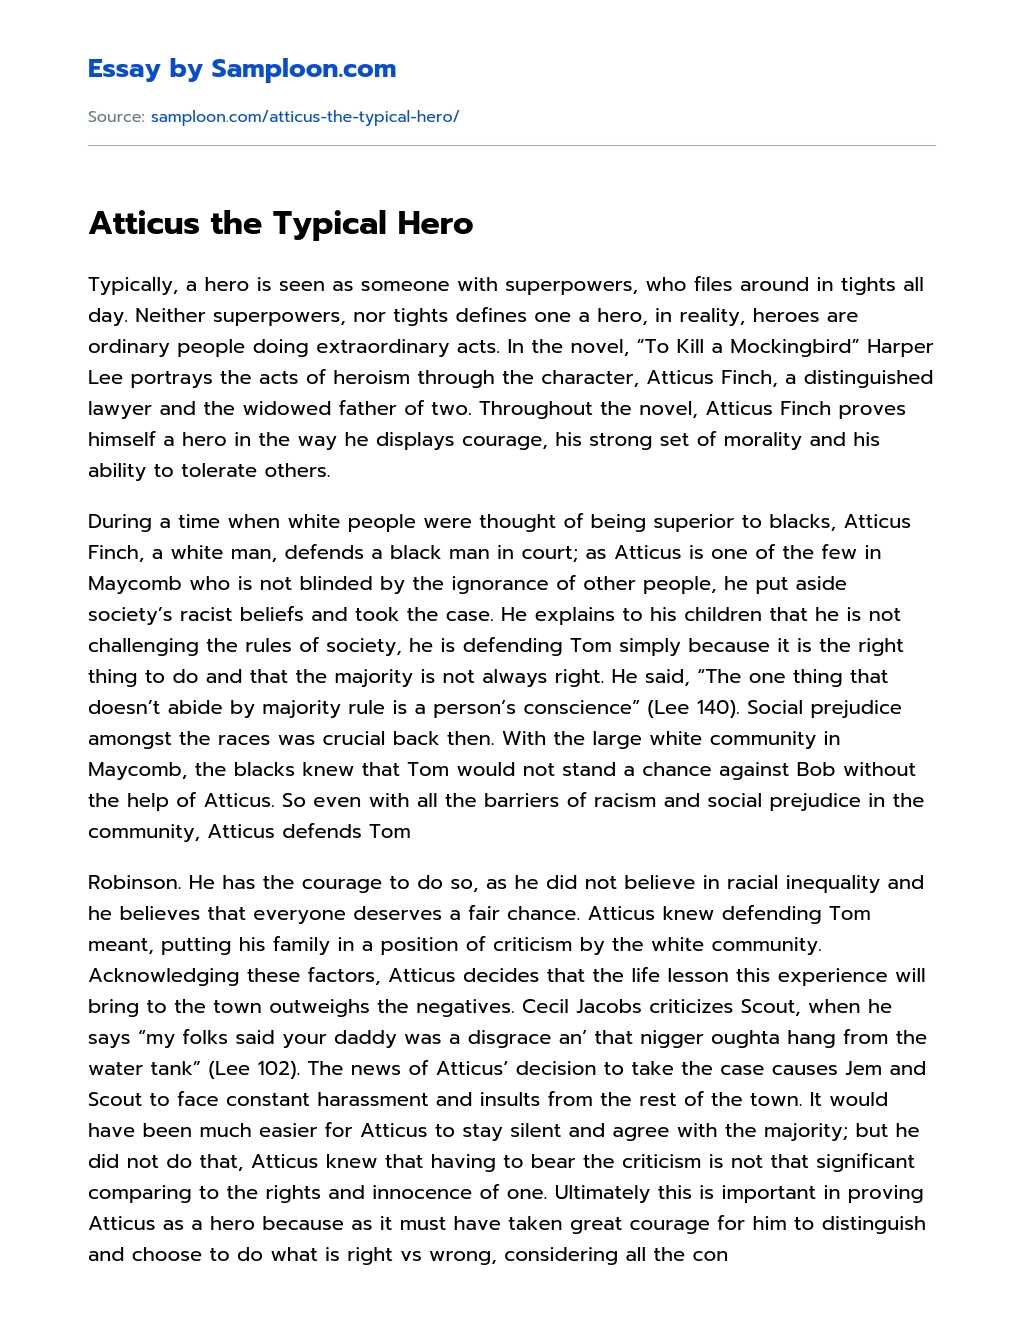 Atticus the Typical Hero Personal Essay essay